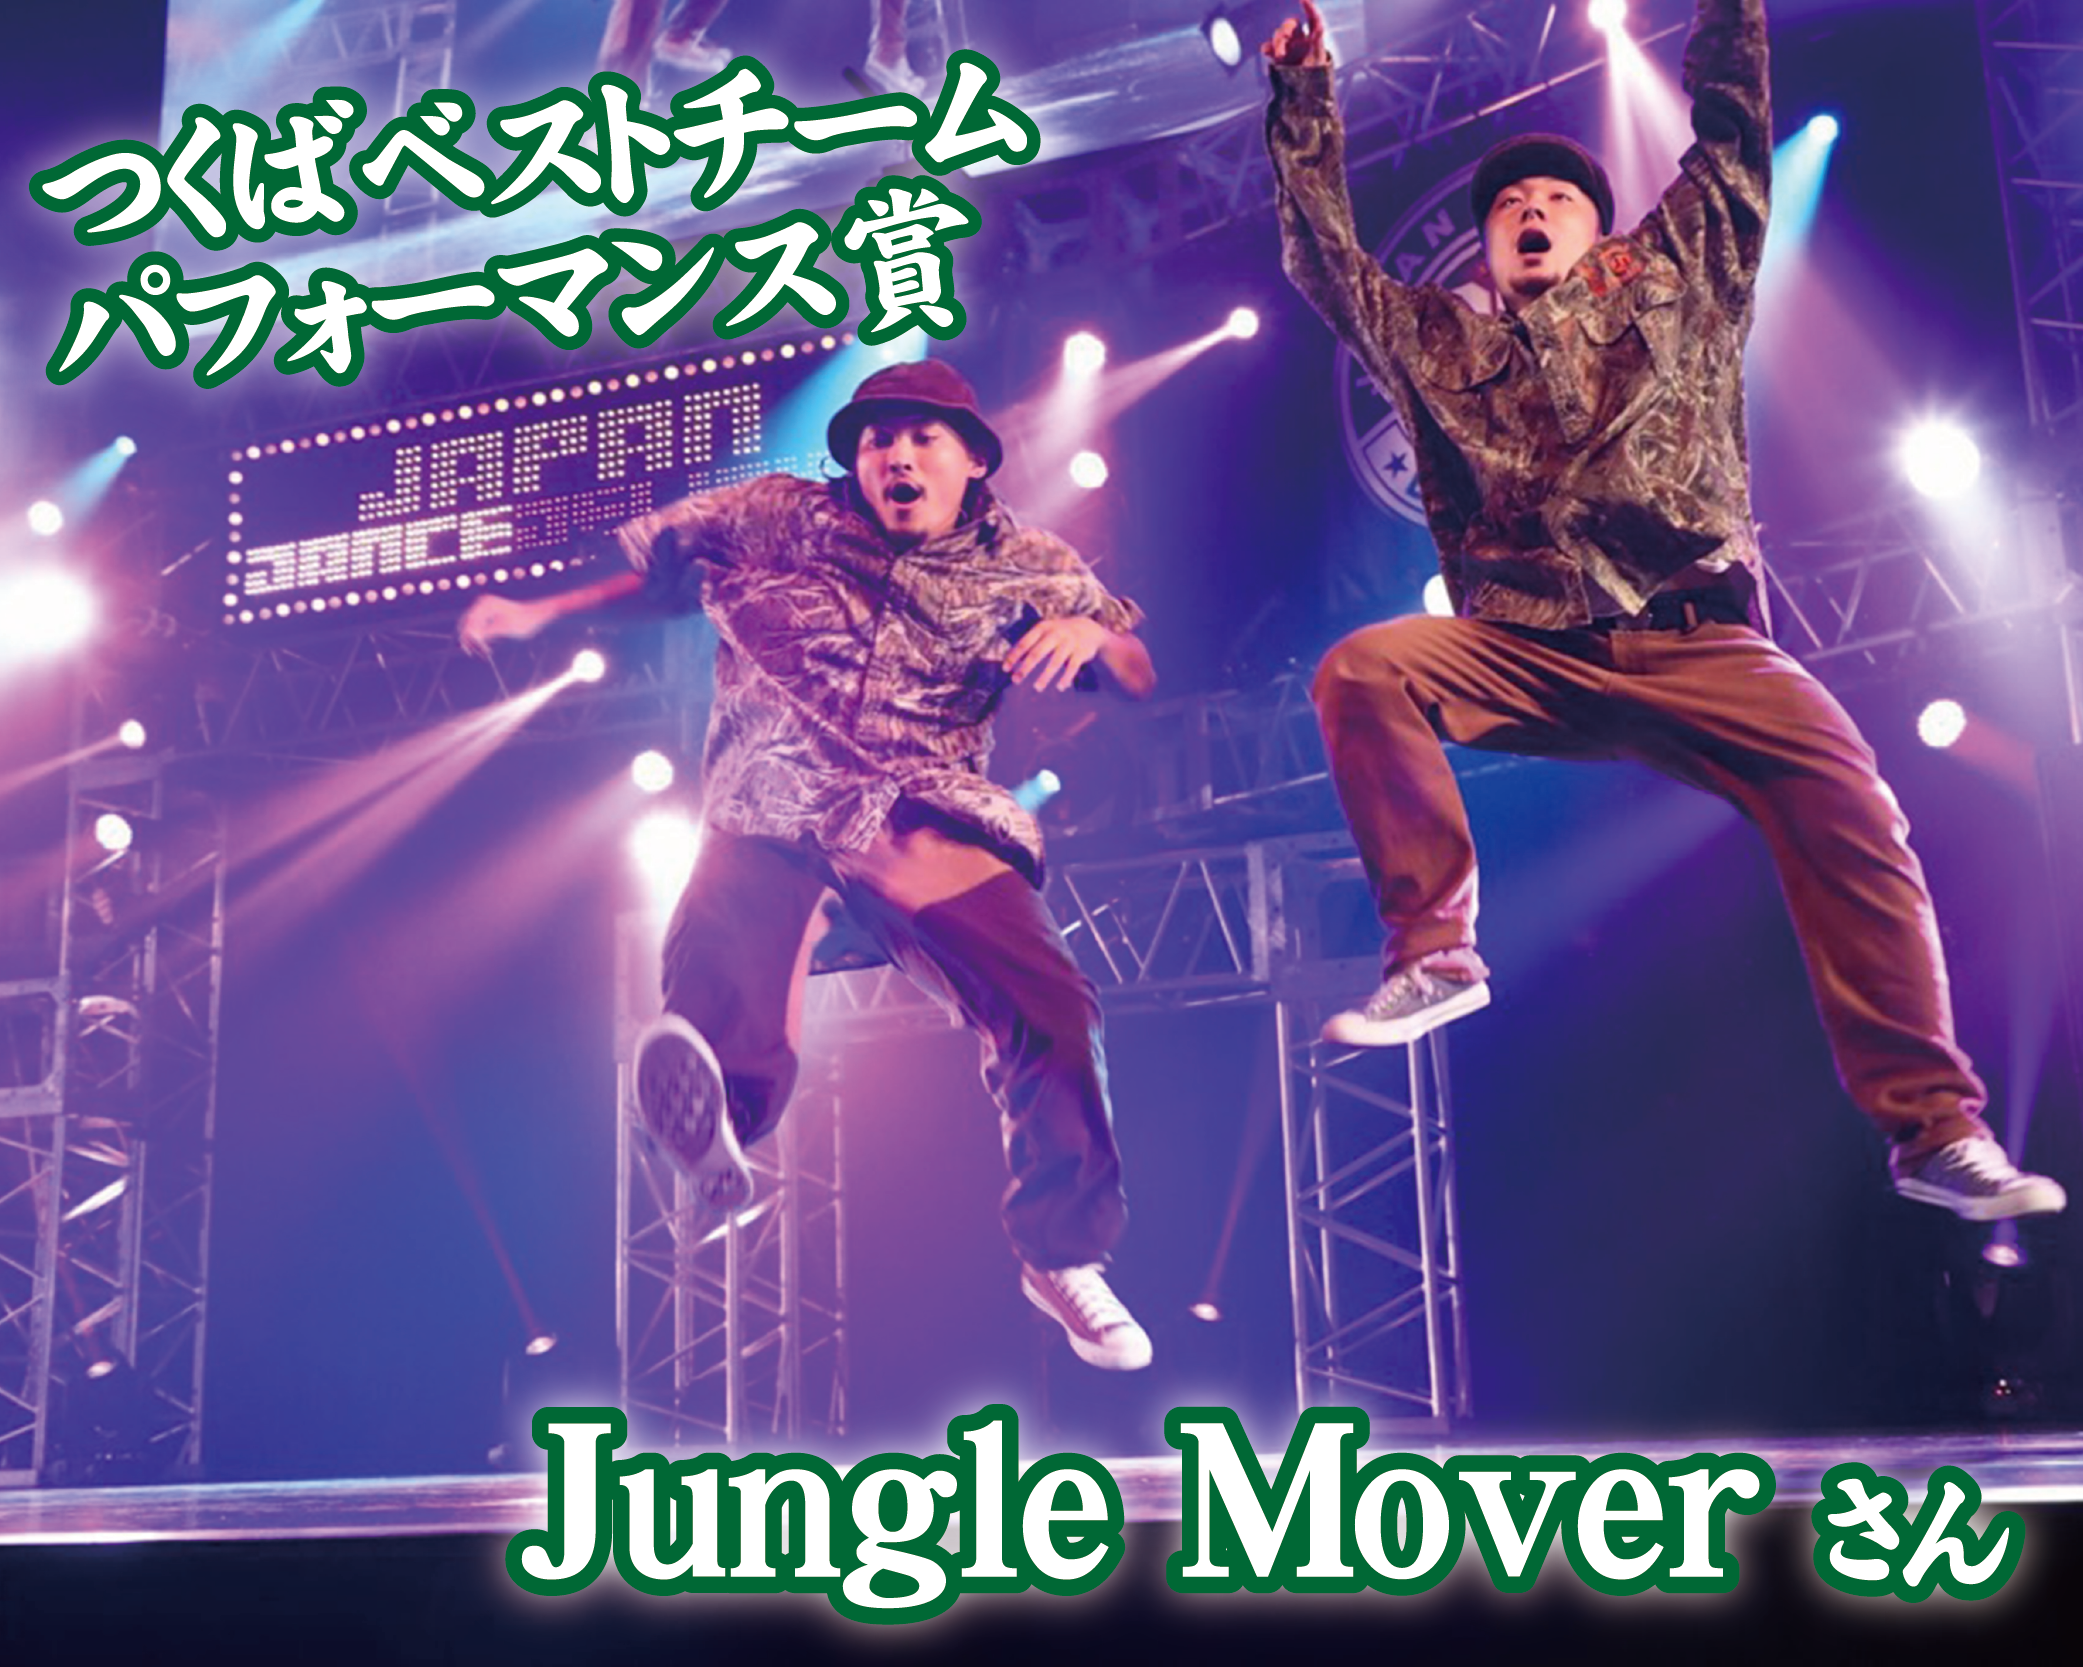 JungleMover500-400-01-01.png